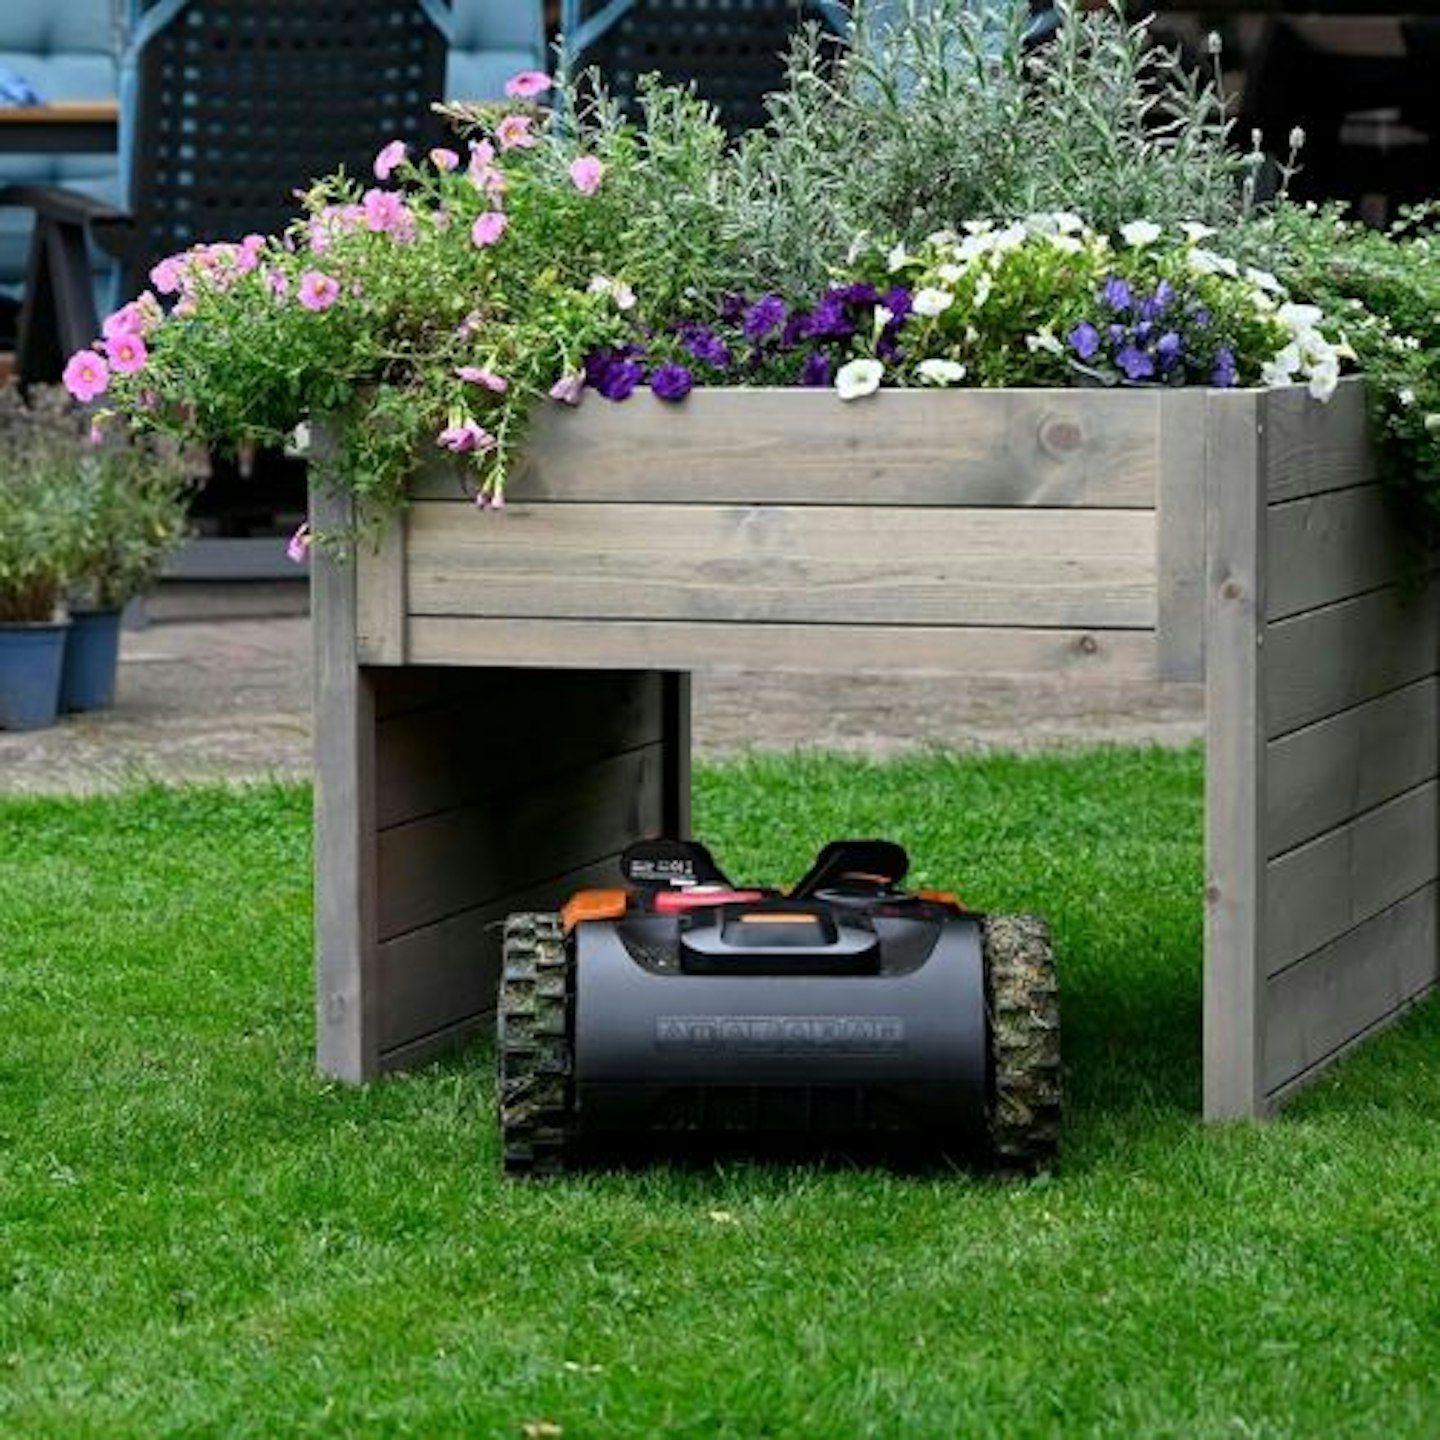 Dobar Robotic Lawn Mower Garage with Planter